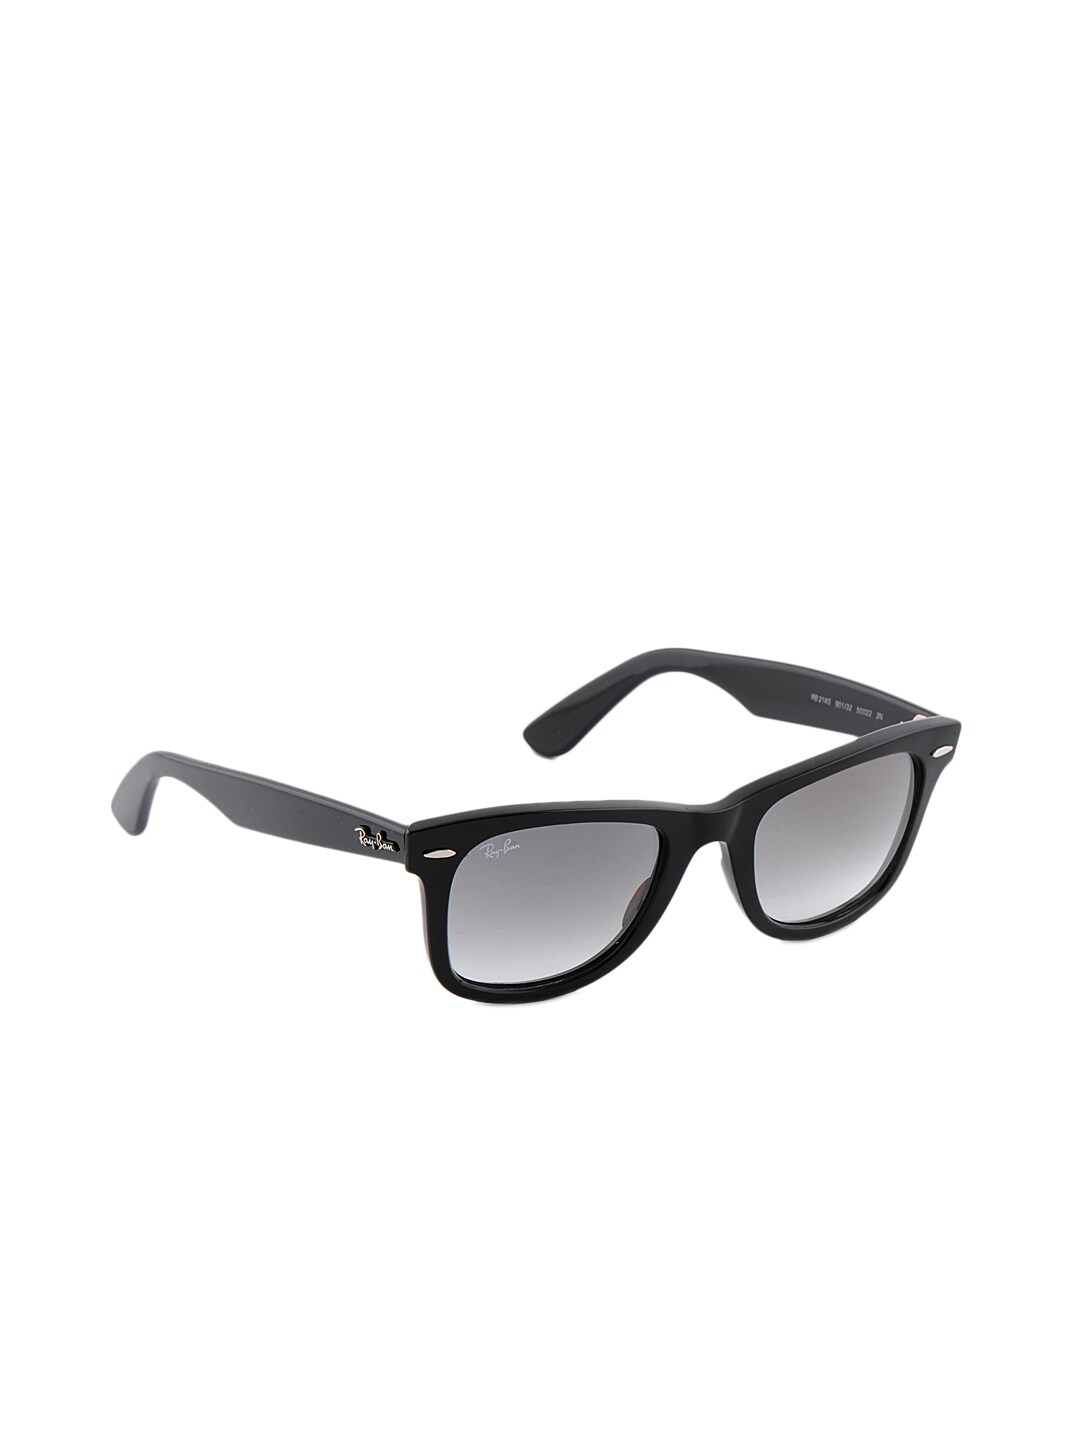 Ray-Ban Men New Wayfarer Sunglasses